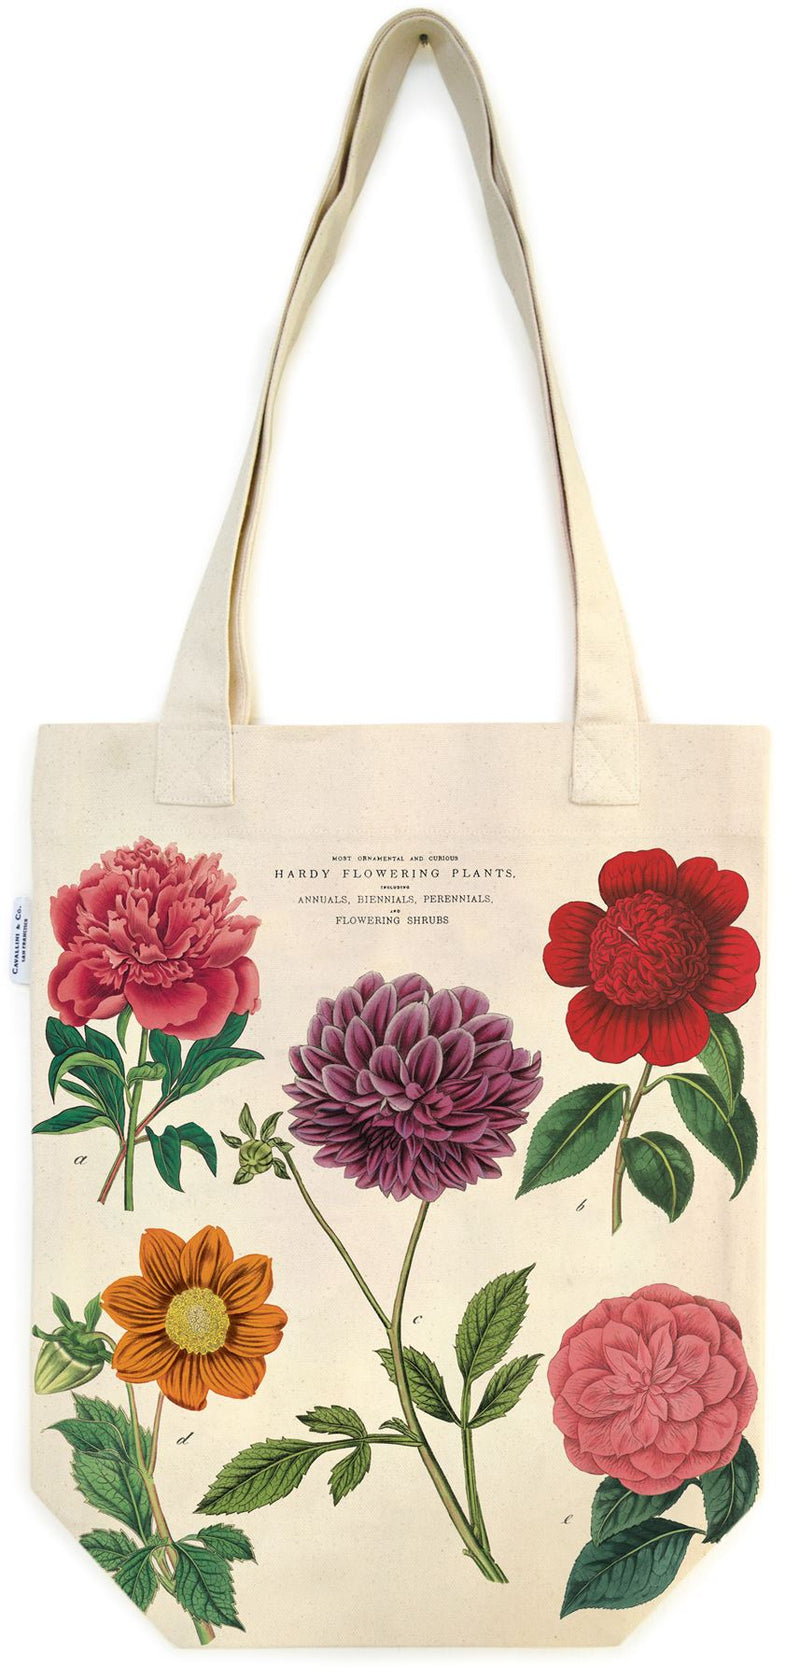 Cavallini - 100% Natural Cotton Vintage Tote Bag - 33x40.5cms - Botanica/Flowering Plants